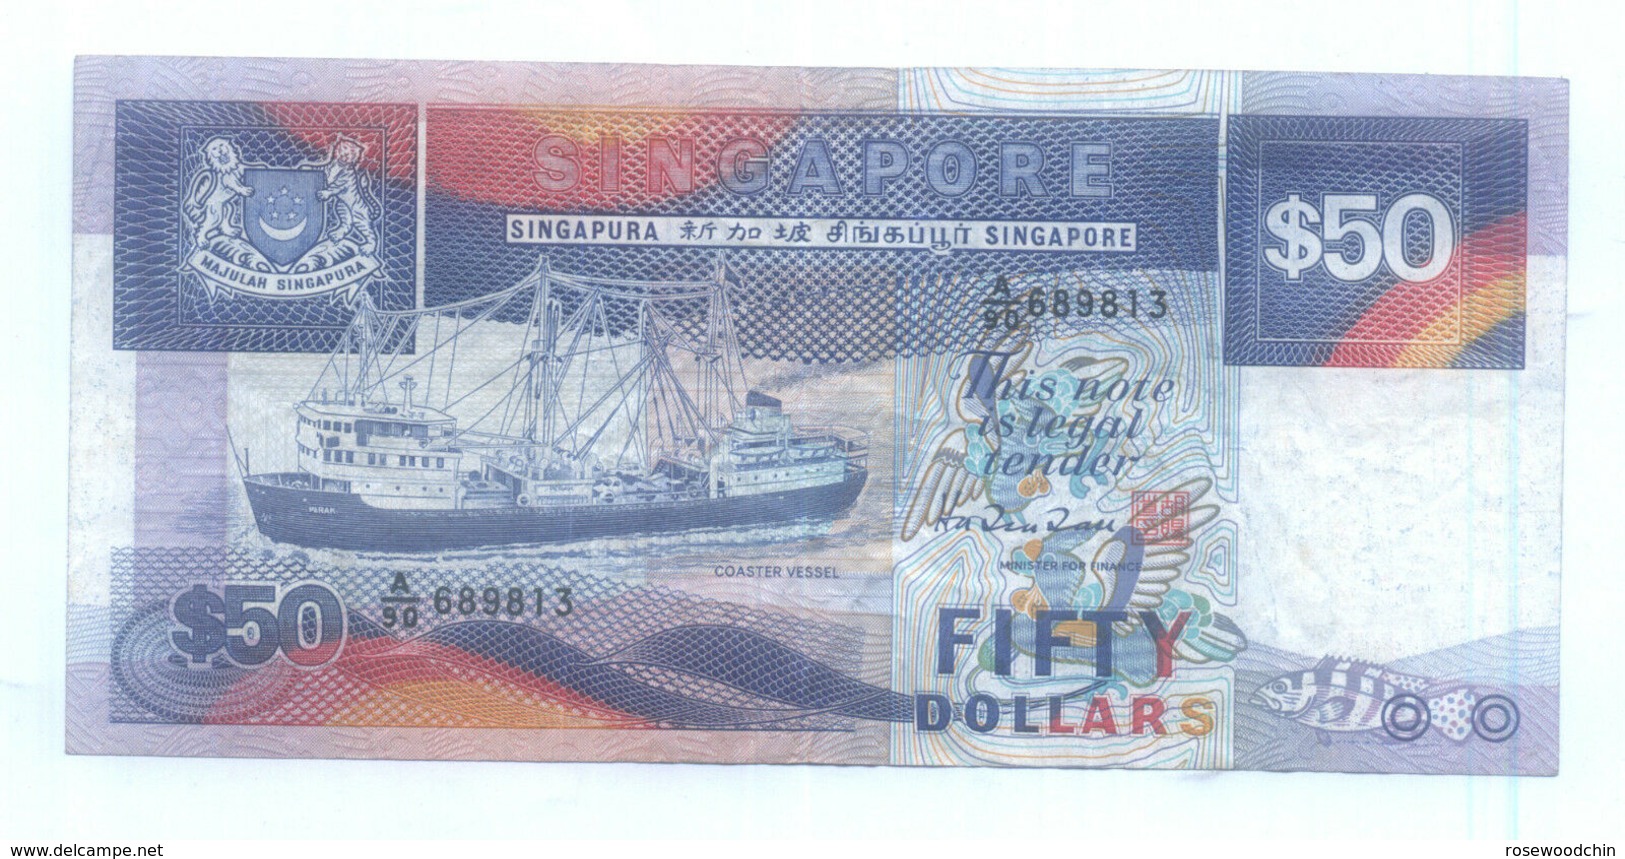 RARE !! SINGAPORE $50 Ship Series Coaster Vessel  CURRENCY MONEY BANKNOTE 'A' PREFIX (#2) - Singapore